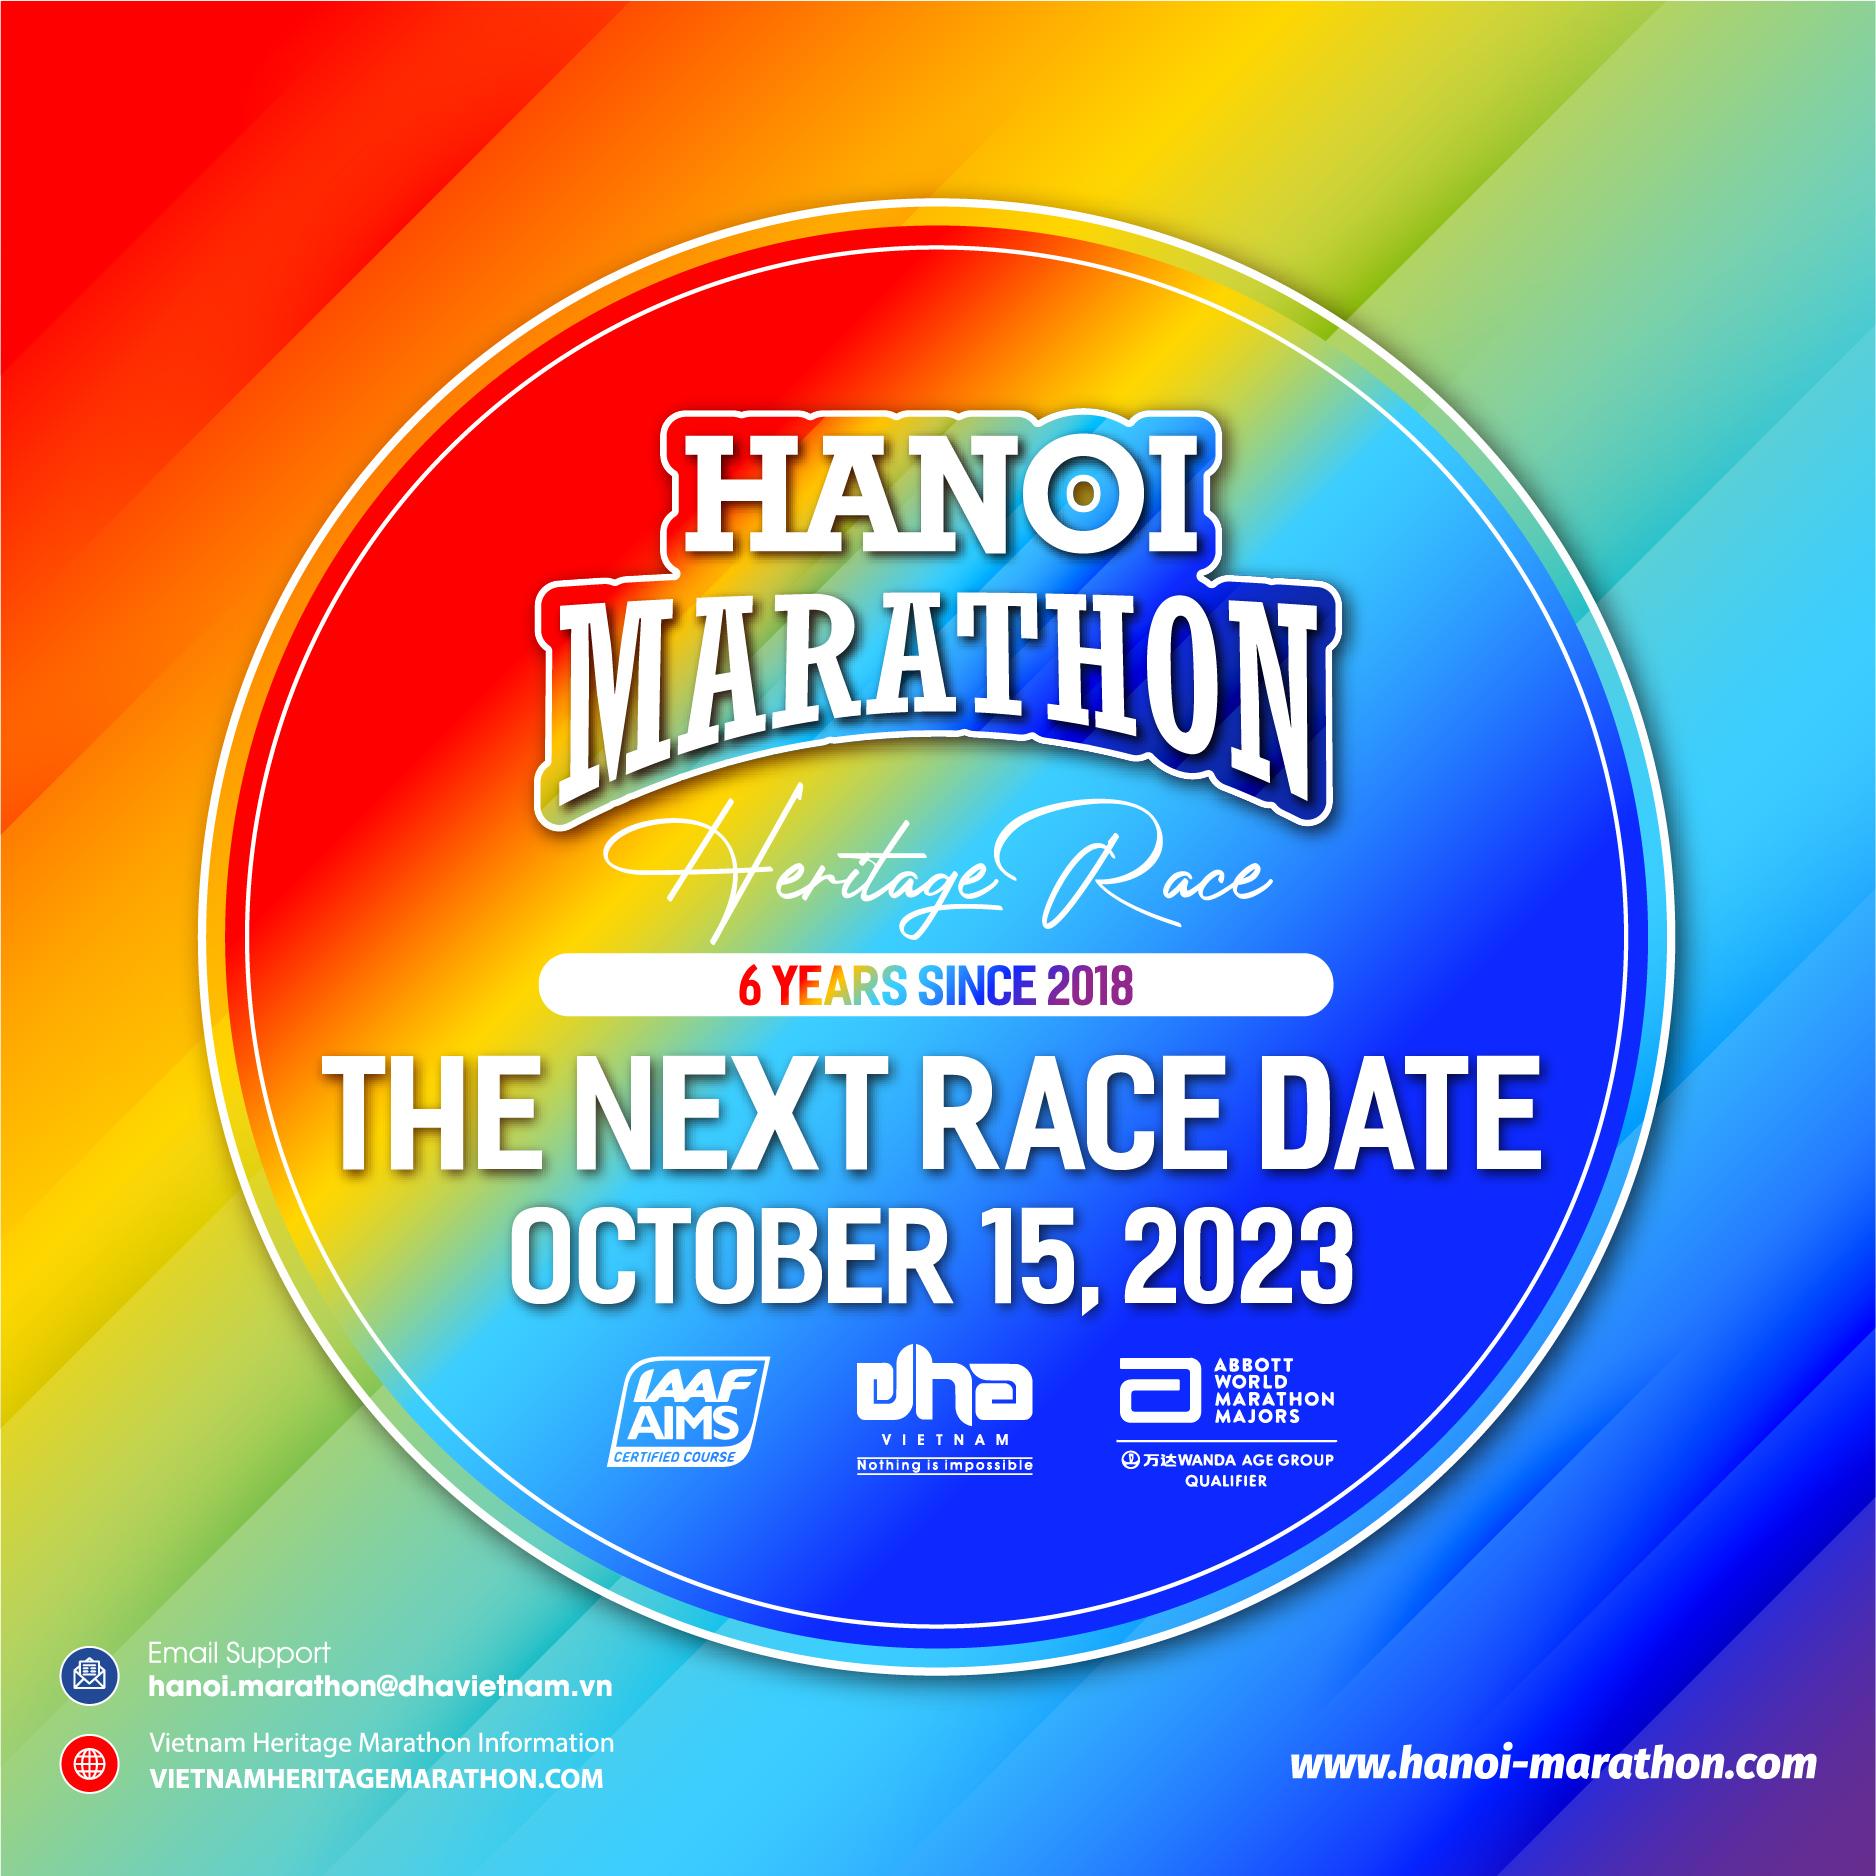 New Race Date For Hanoi Marathon Heritage Race: Oct 15, 2023